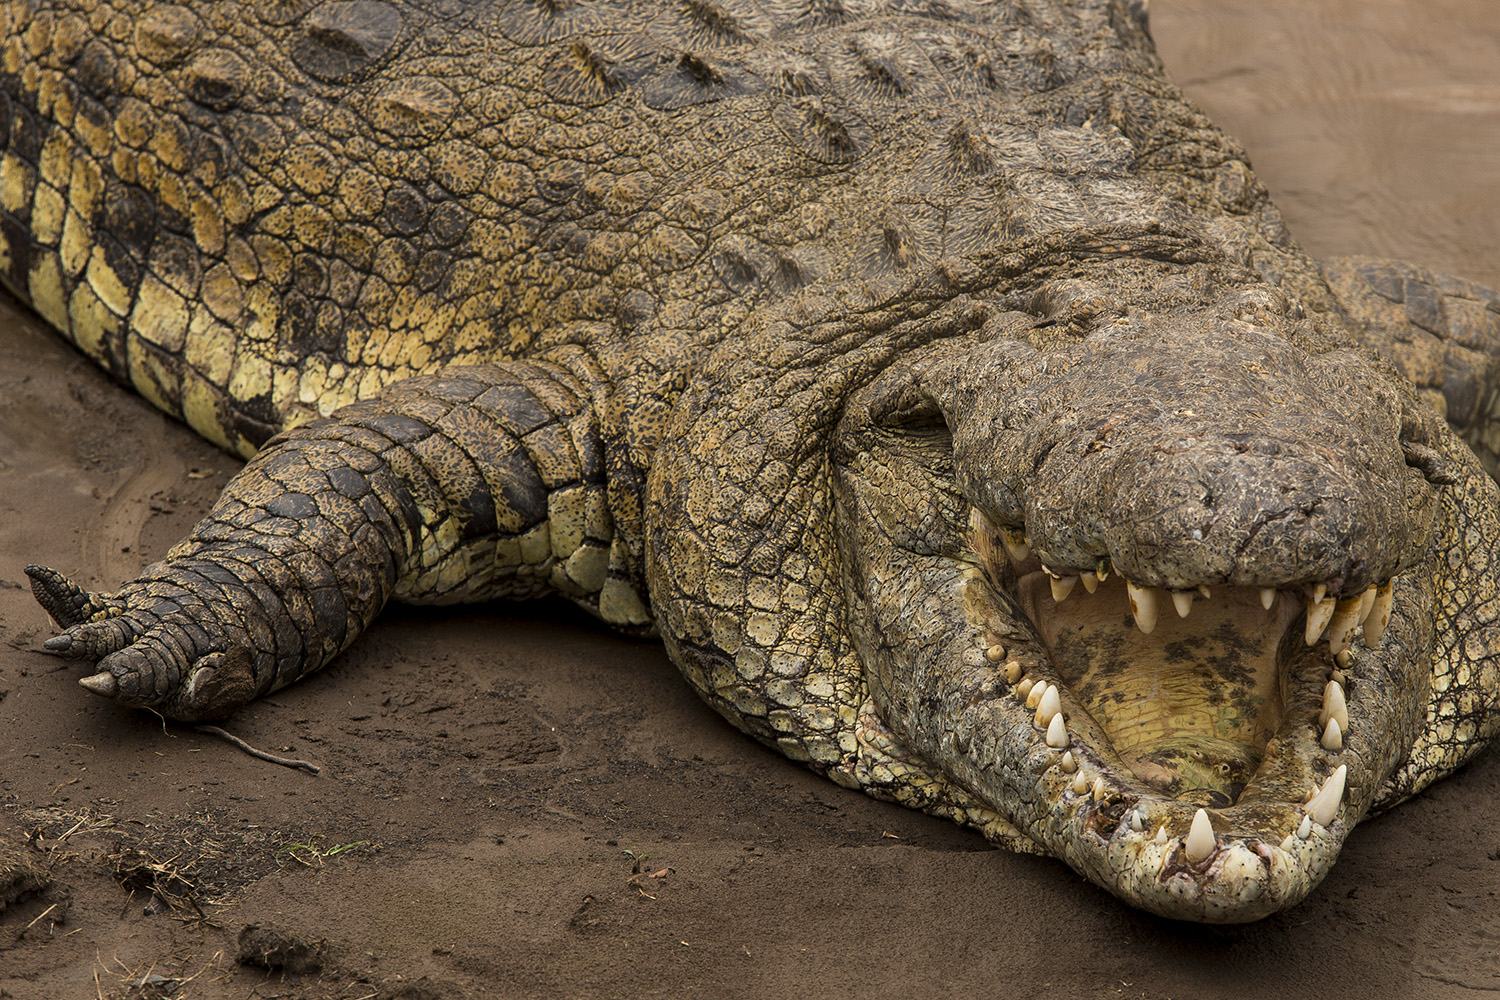 Crocodile teeth at the great migration